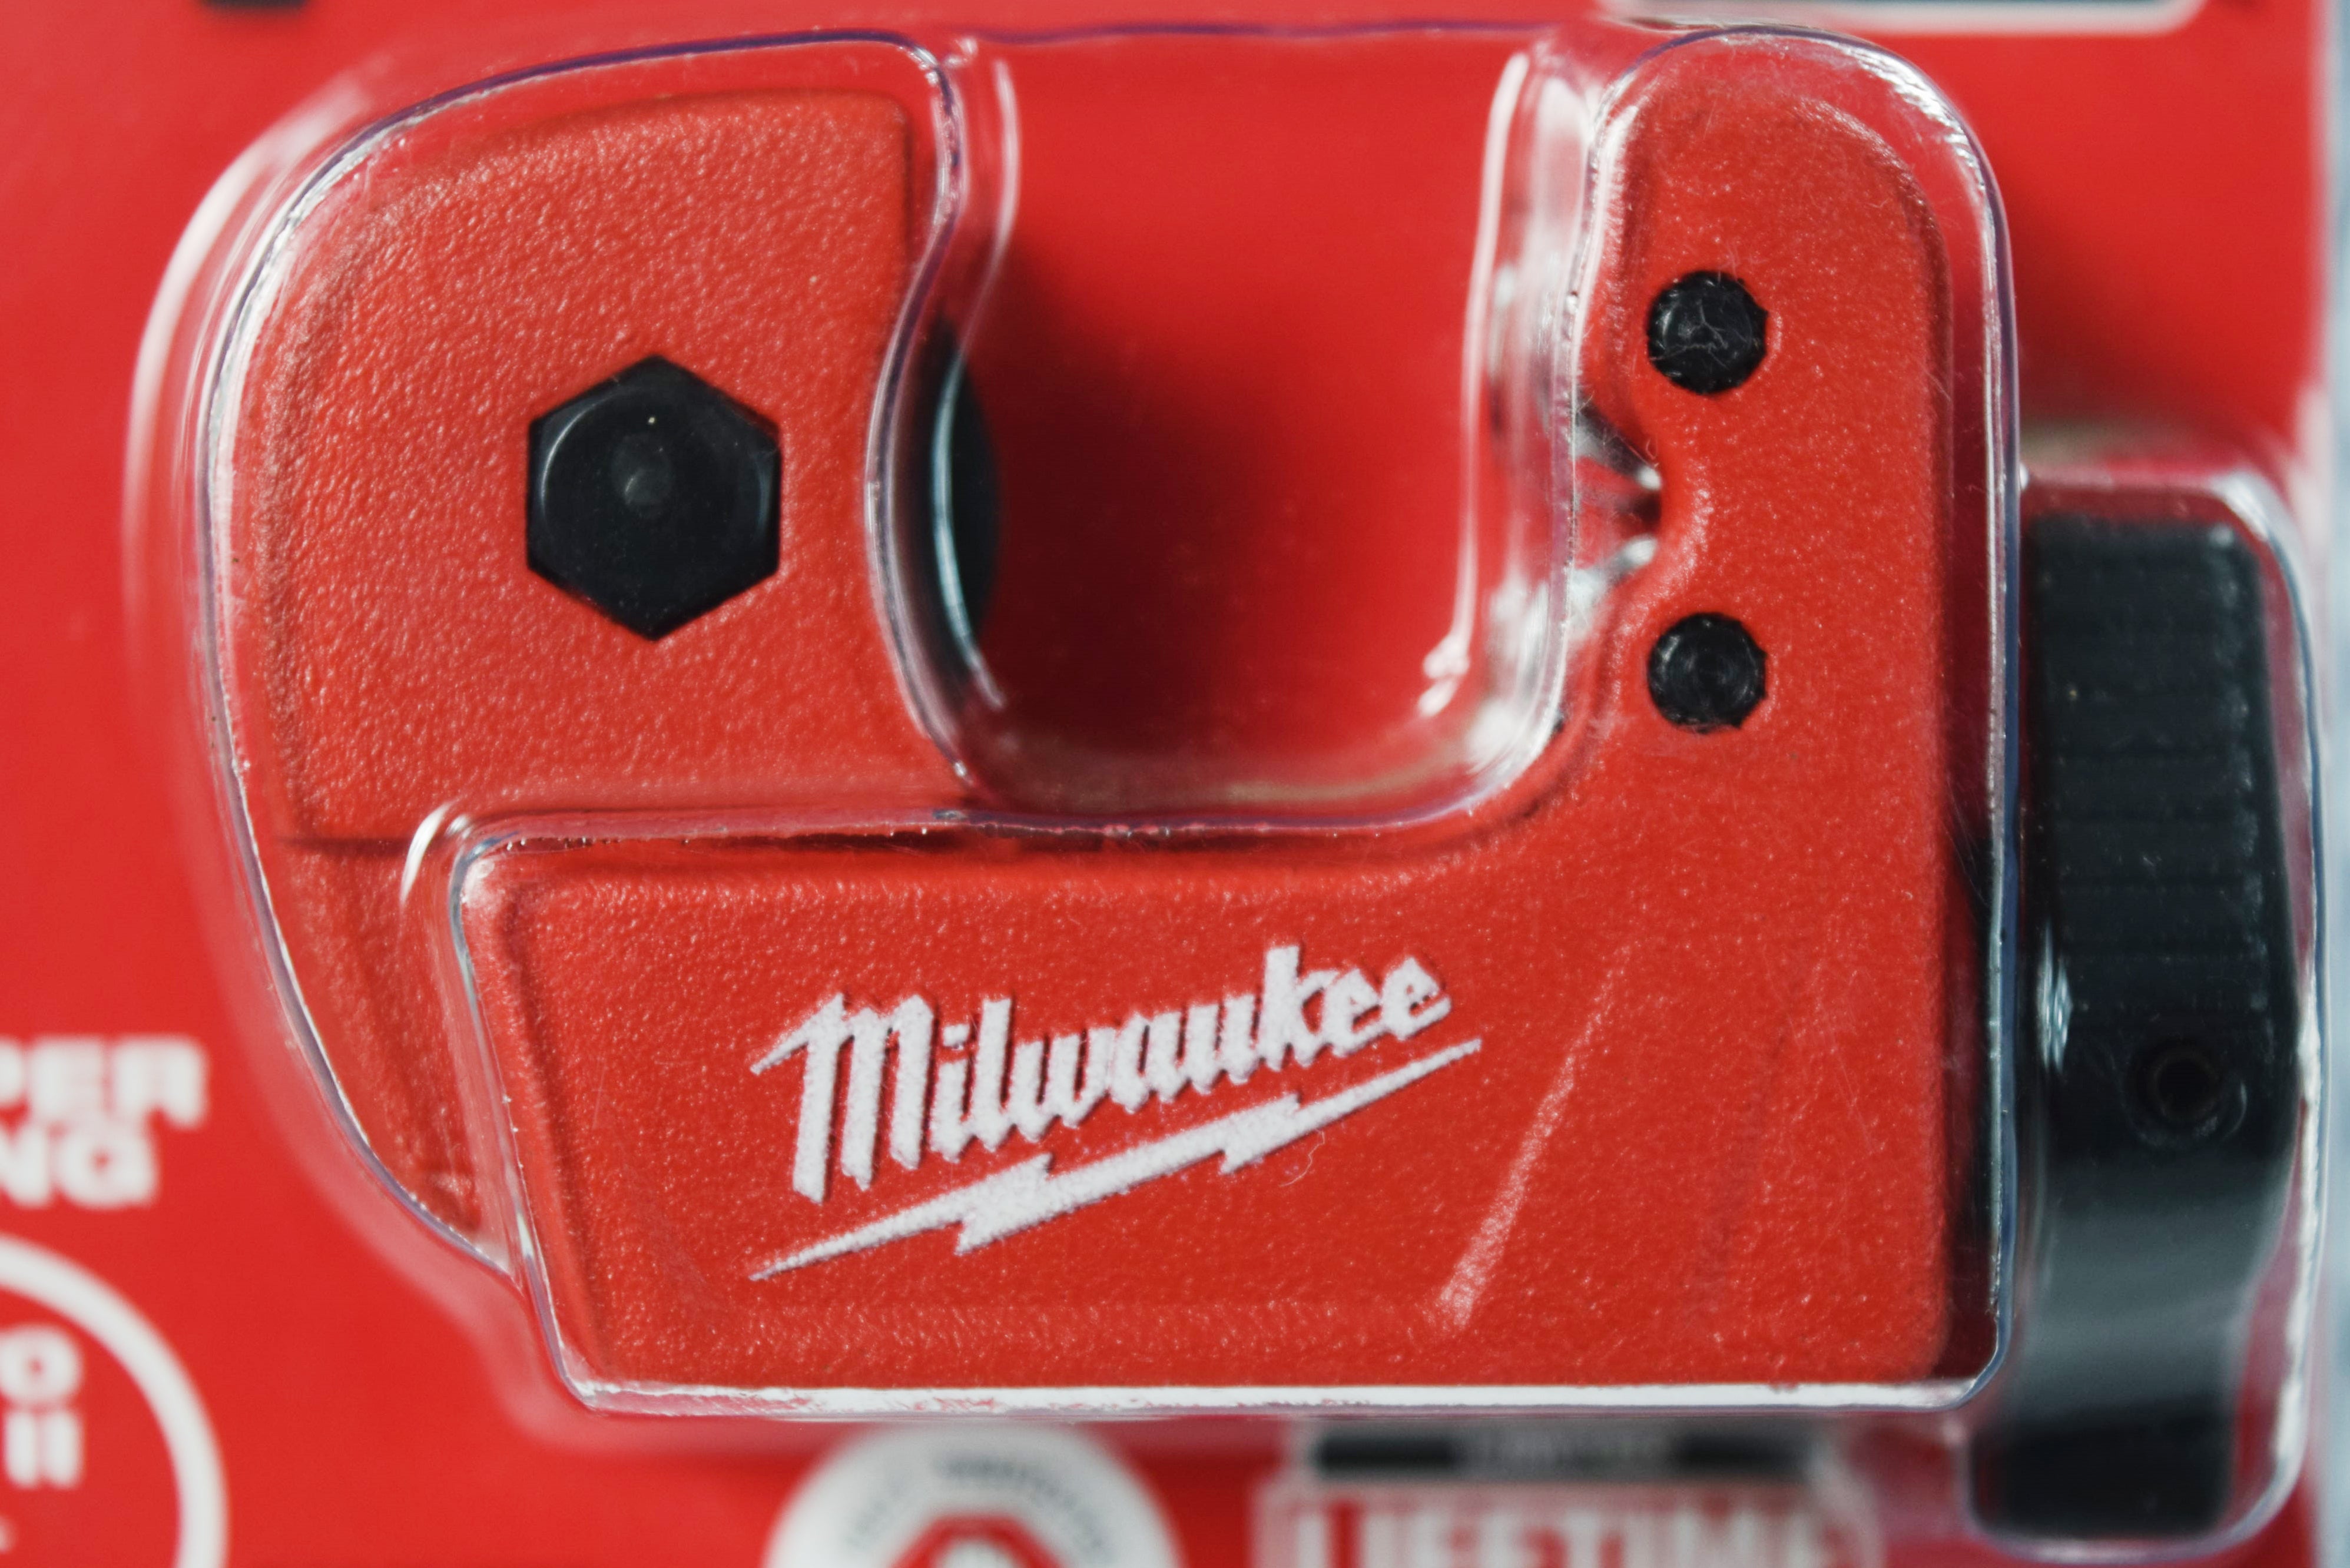 Milwaukee 48-22-4250 1/2-inch Heavy Duty Mini Red Copper Tubing Cutter